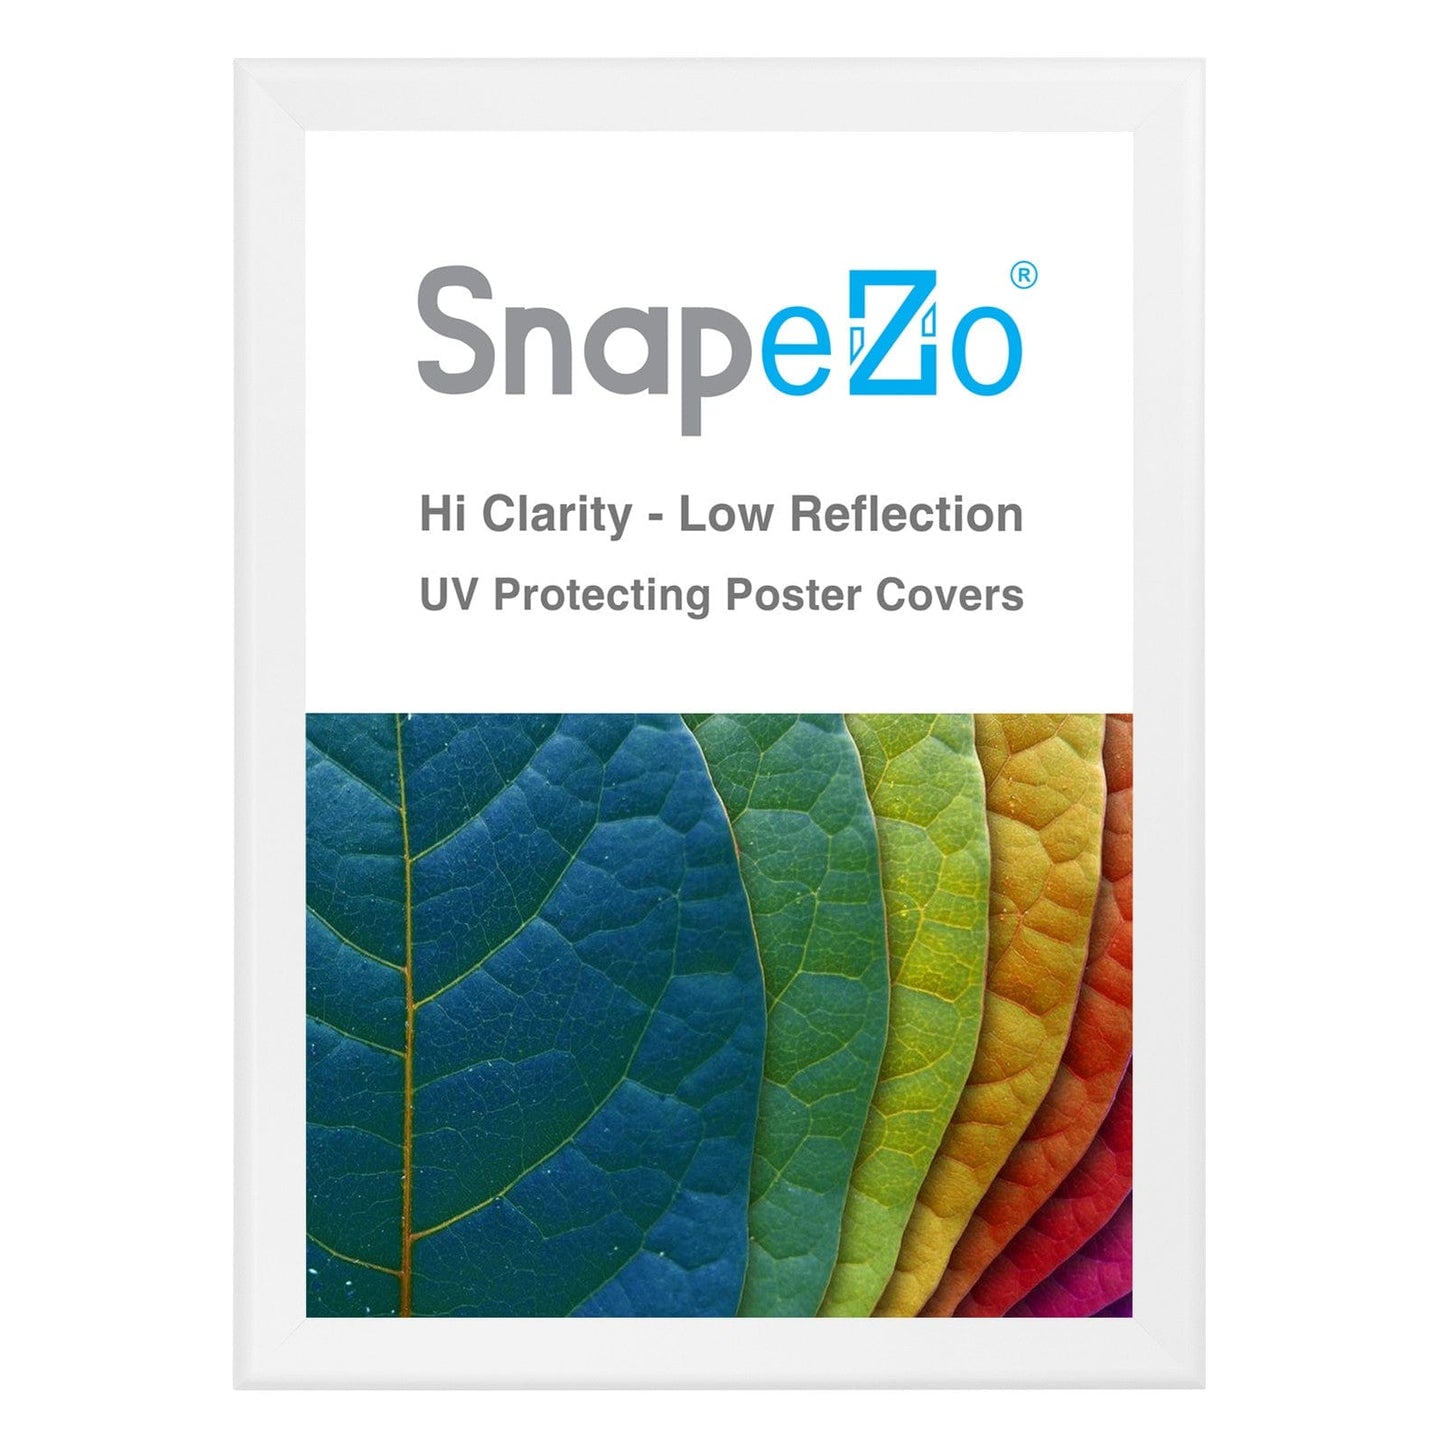 33x46 White SnapeZo® Snap Frame - 1.7" Profile - Snap Frames Direct